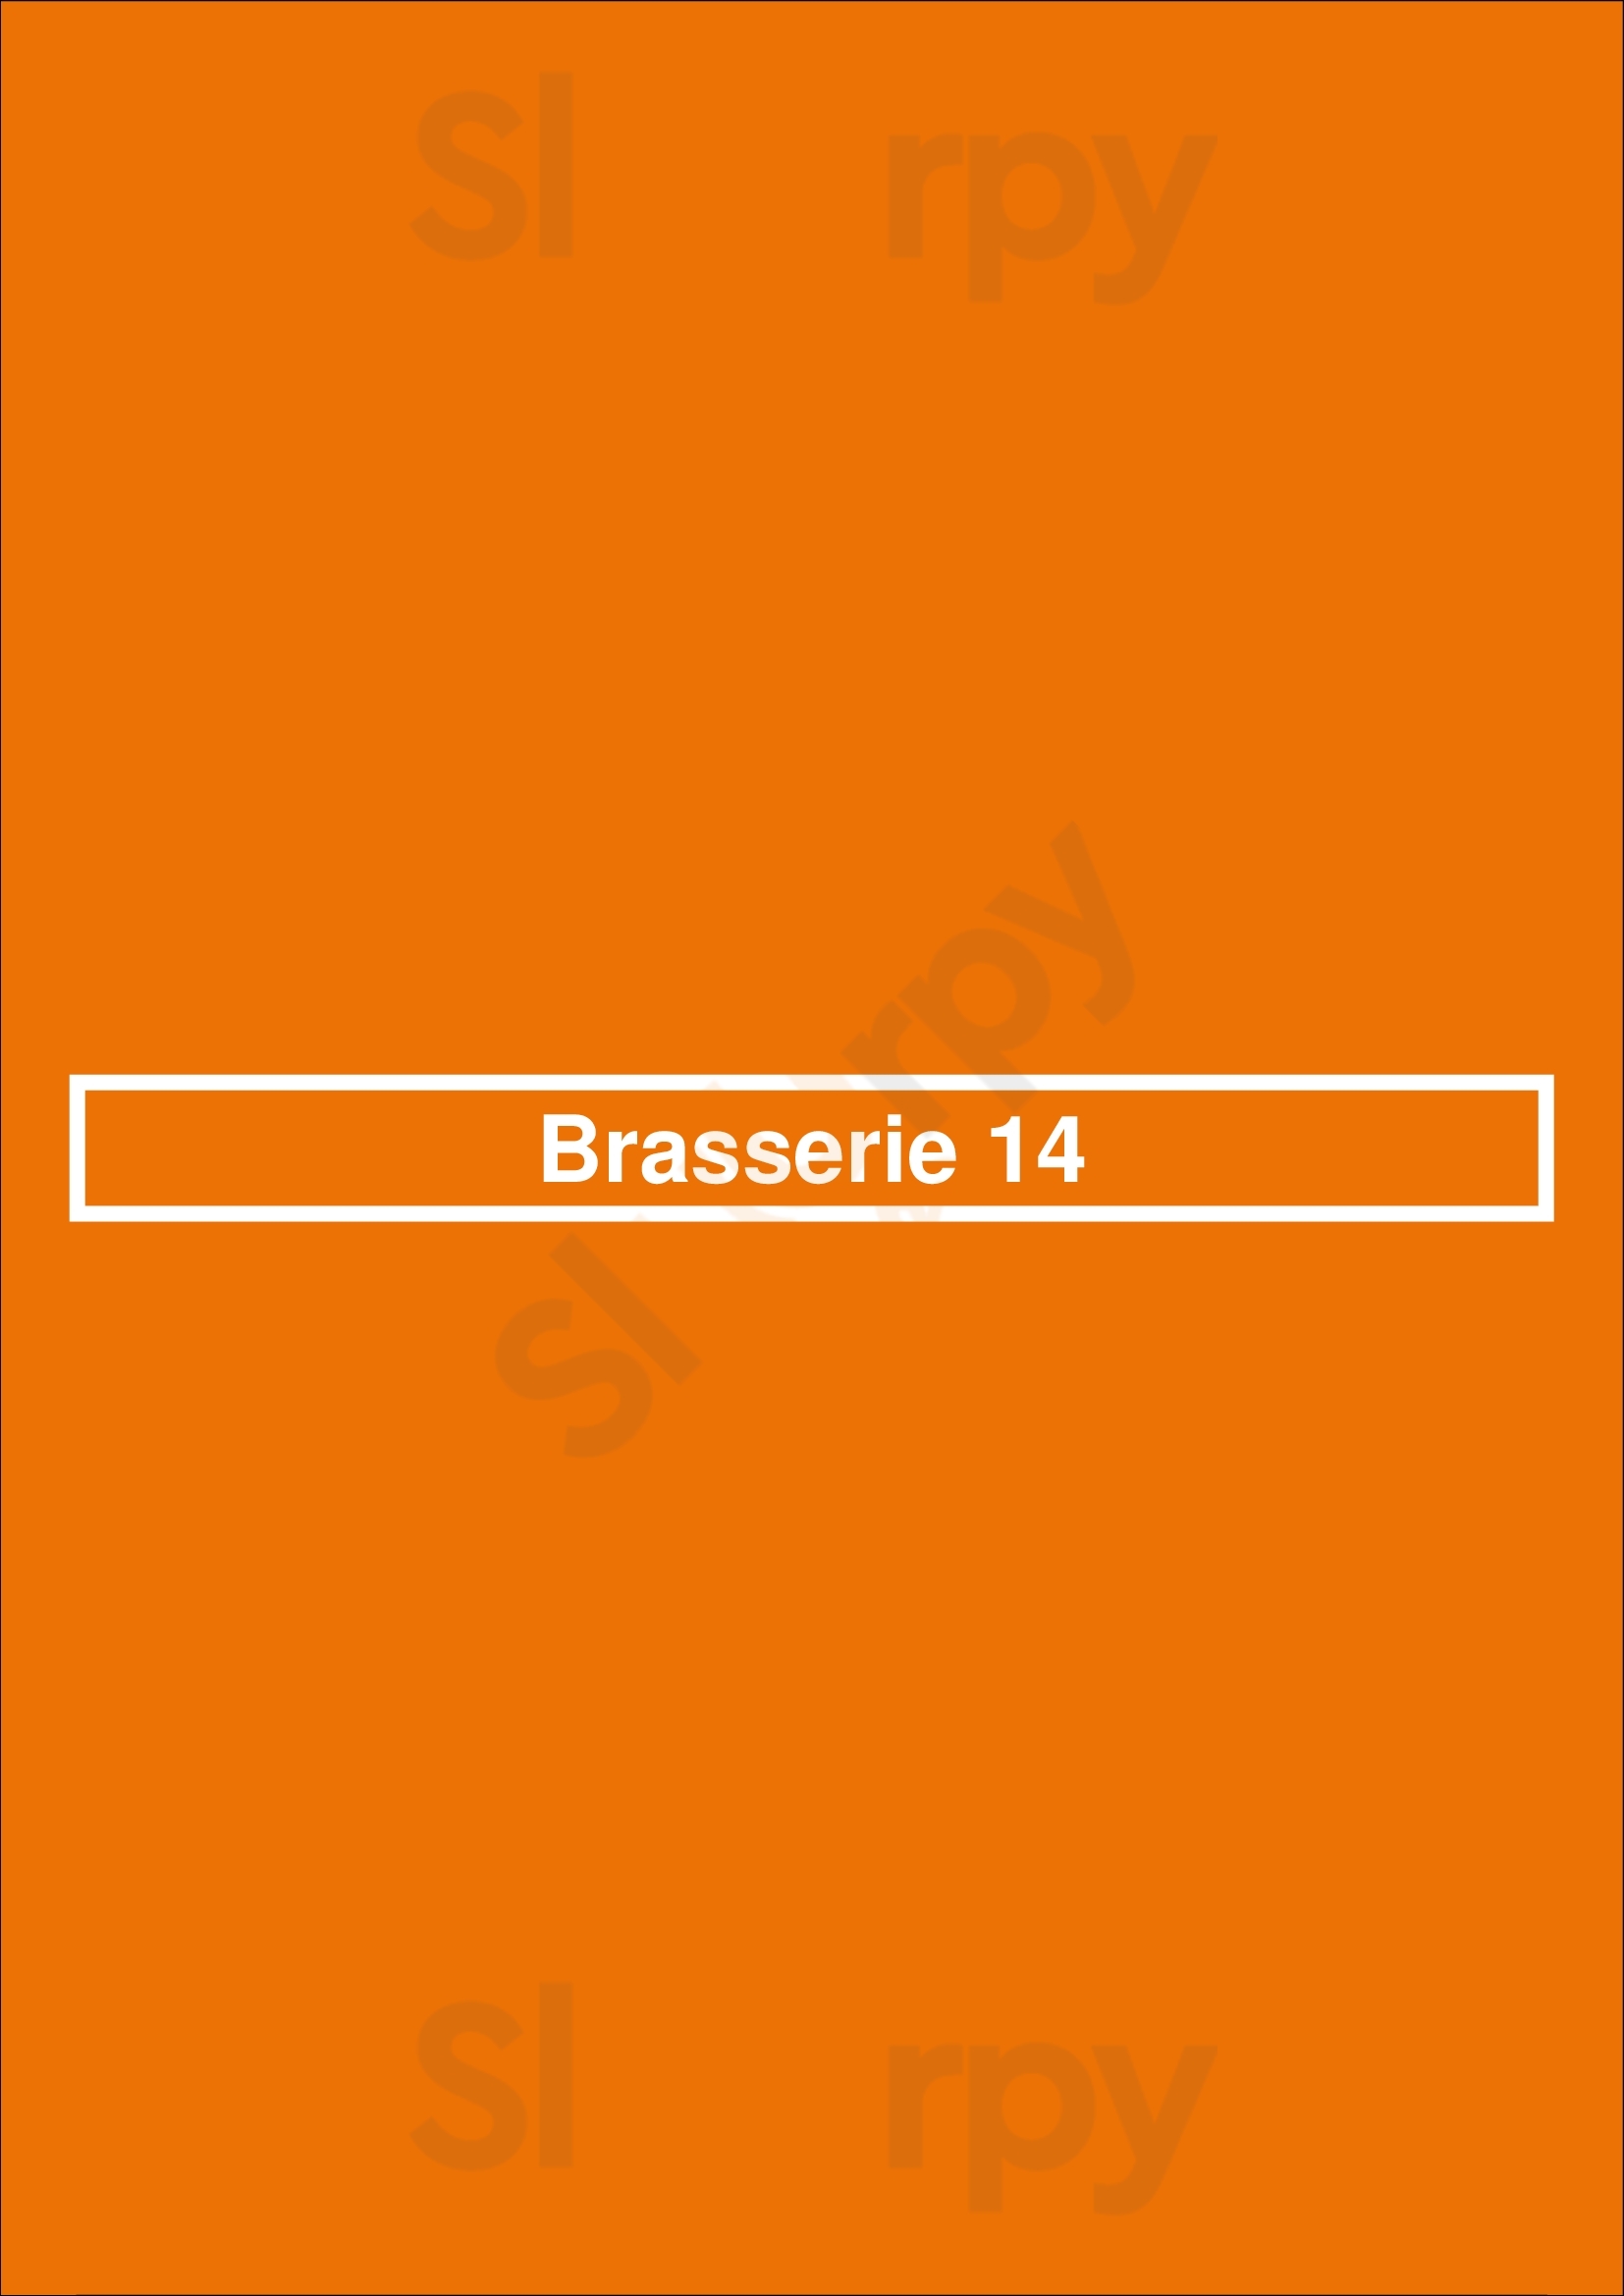 Brasserie 14 Nunspeet Menu - 1